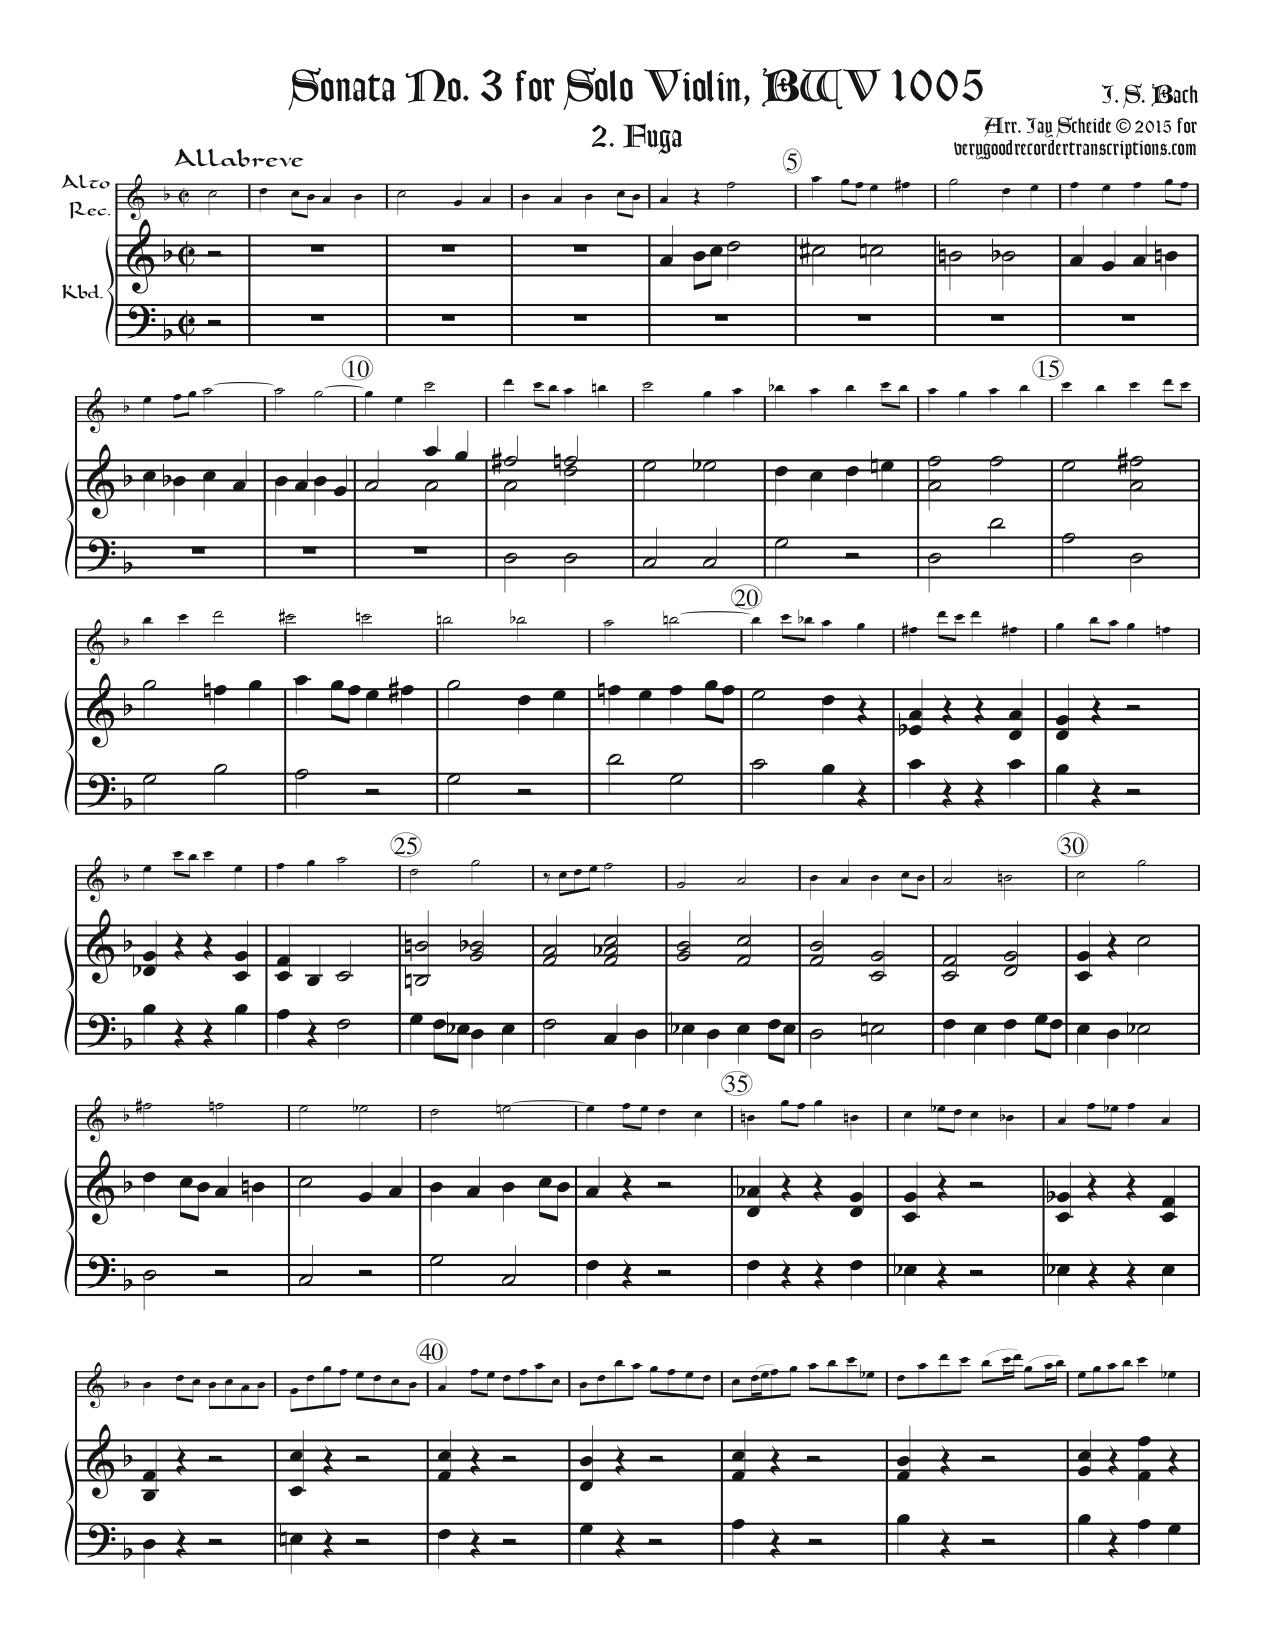 Fugue from Sonata No. 3, BWV 1005